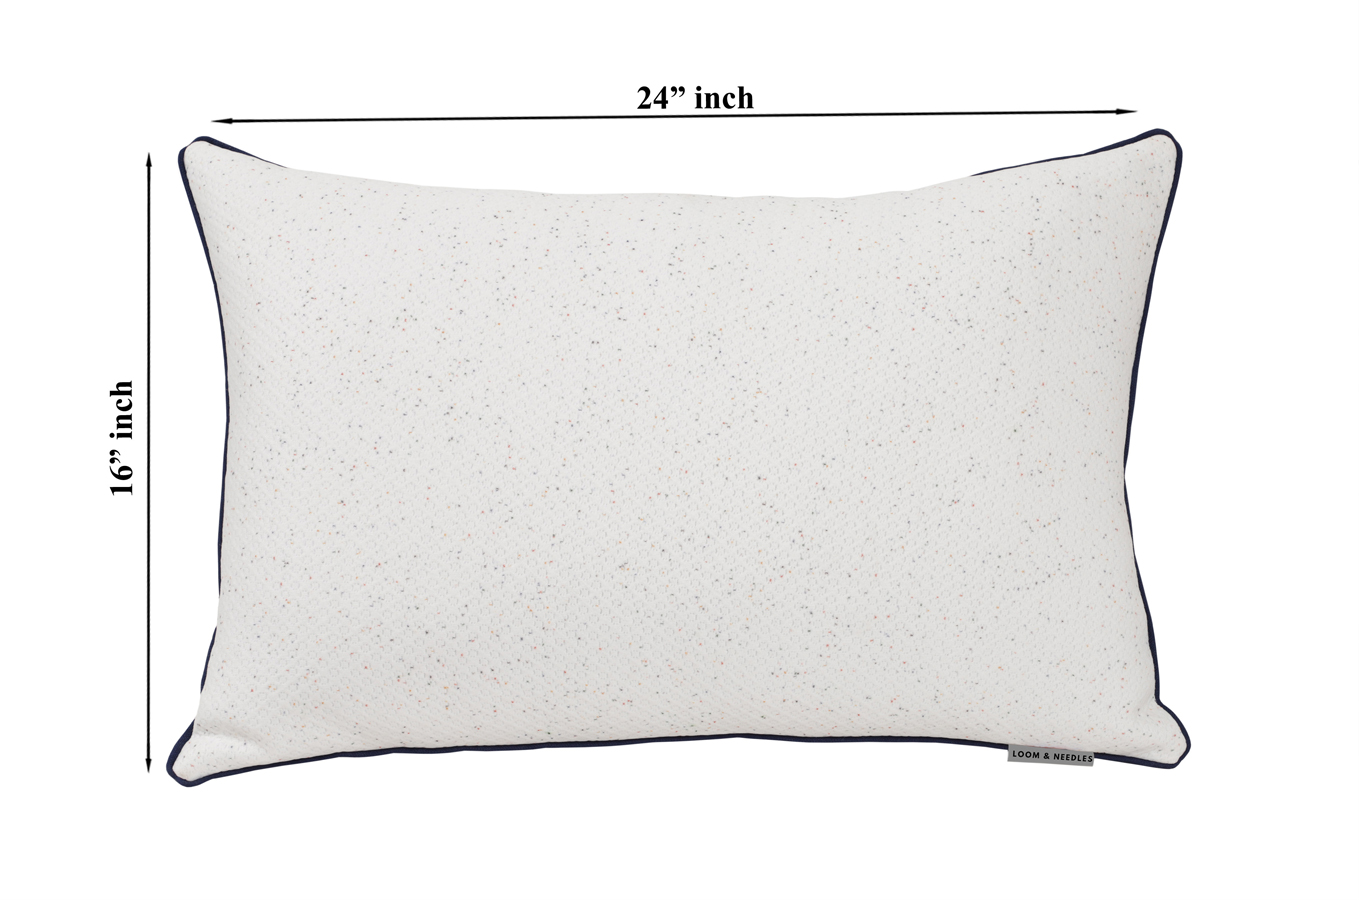 The Comfortable Micro Fibre Pillow at Loom & Needles